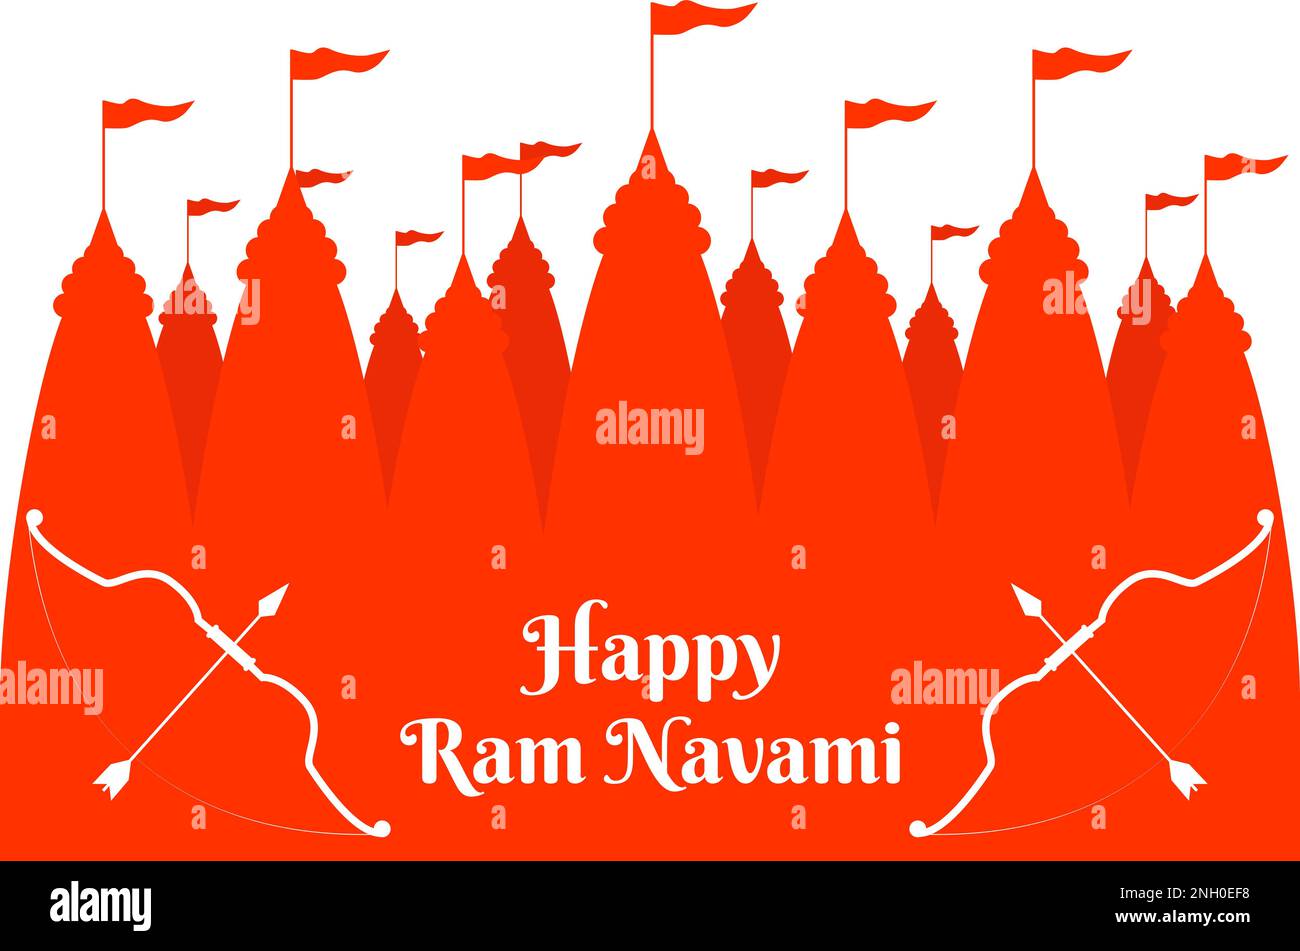 ram navami festival background illustration Stock Vector